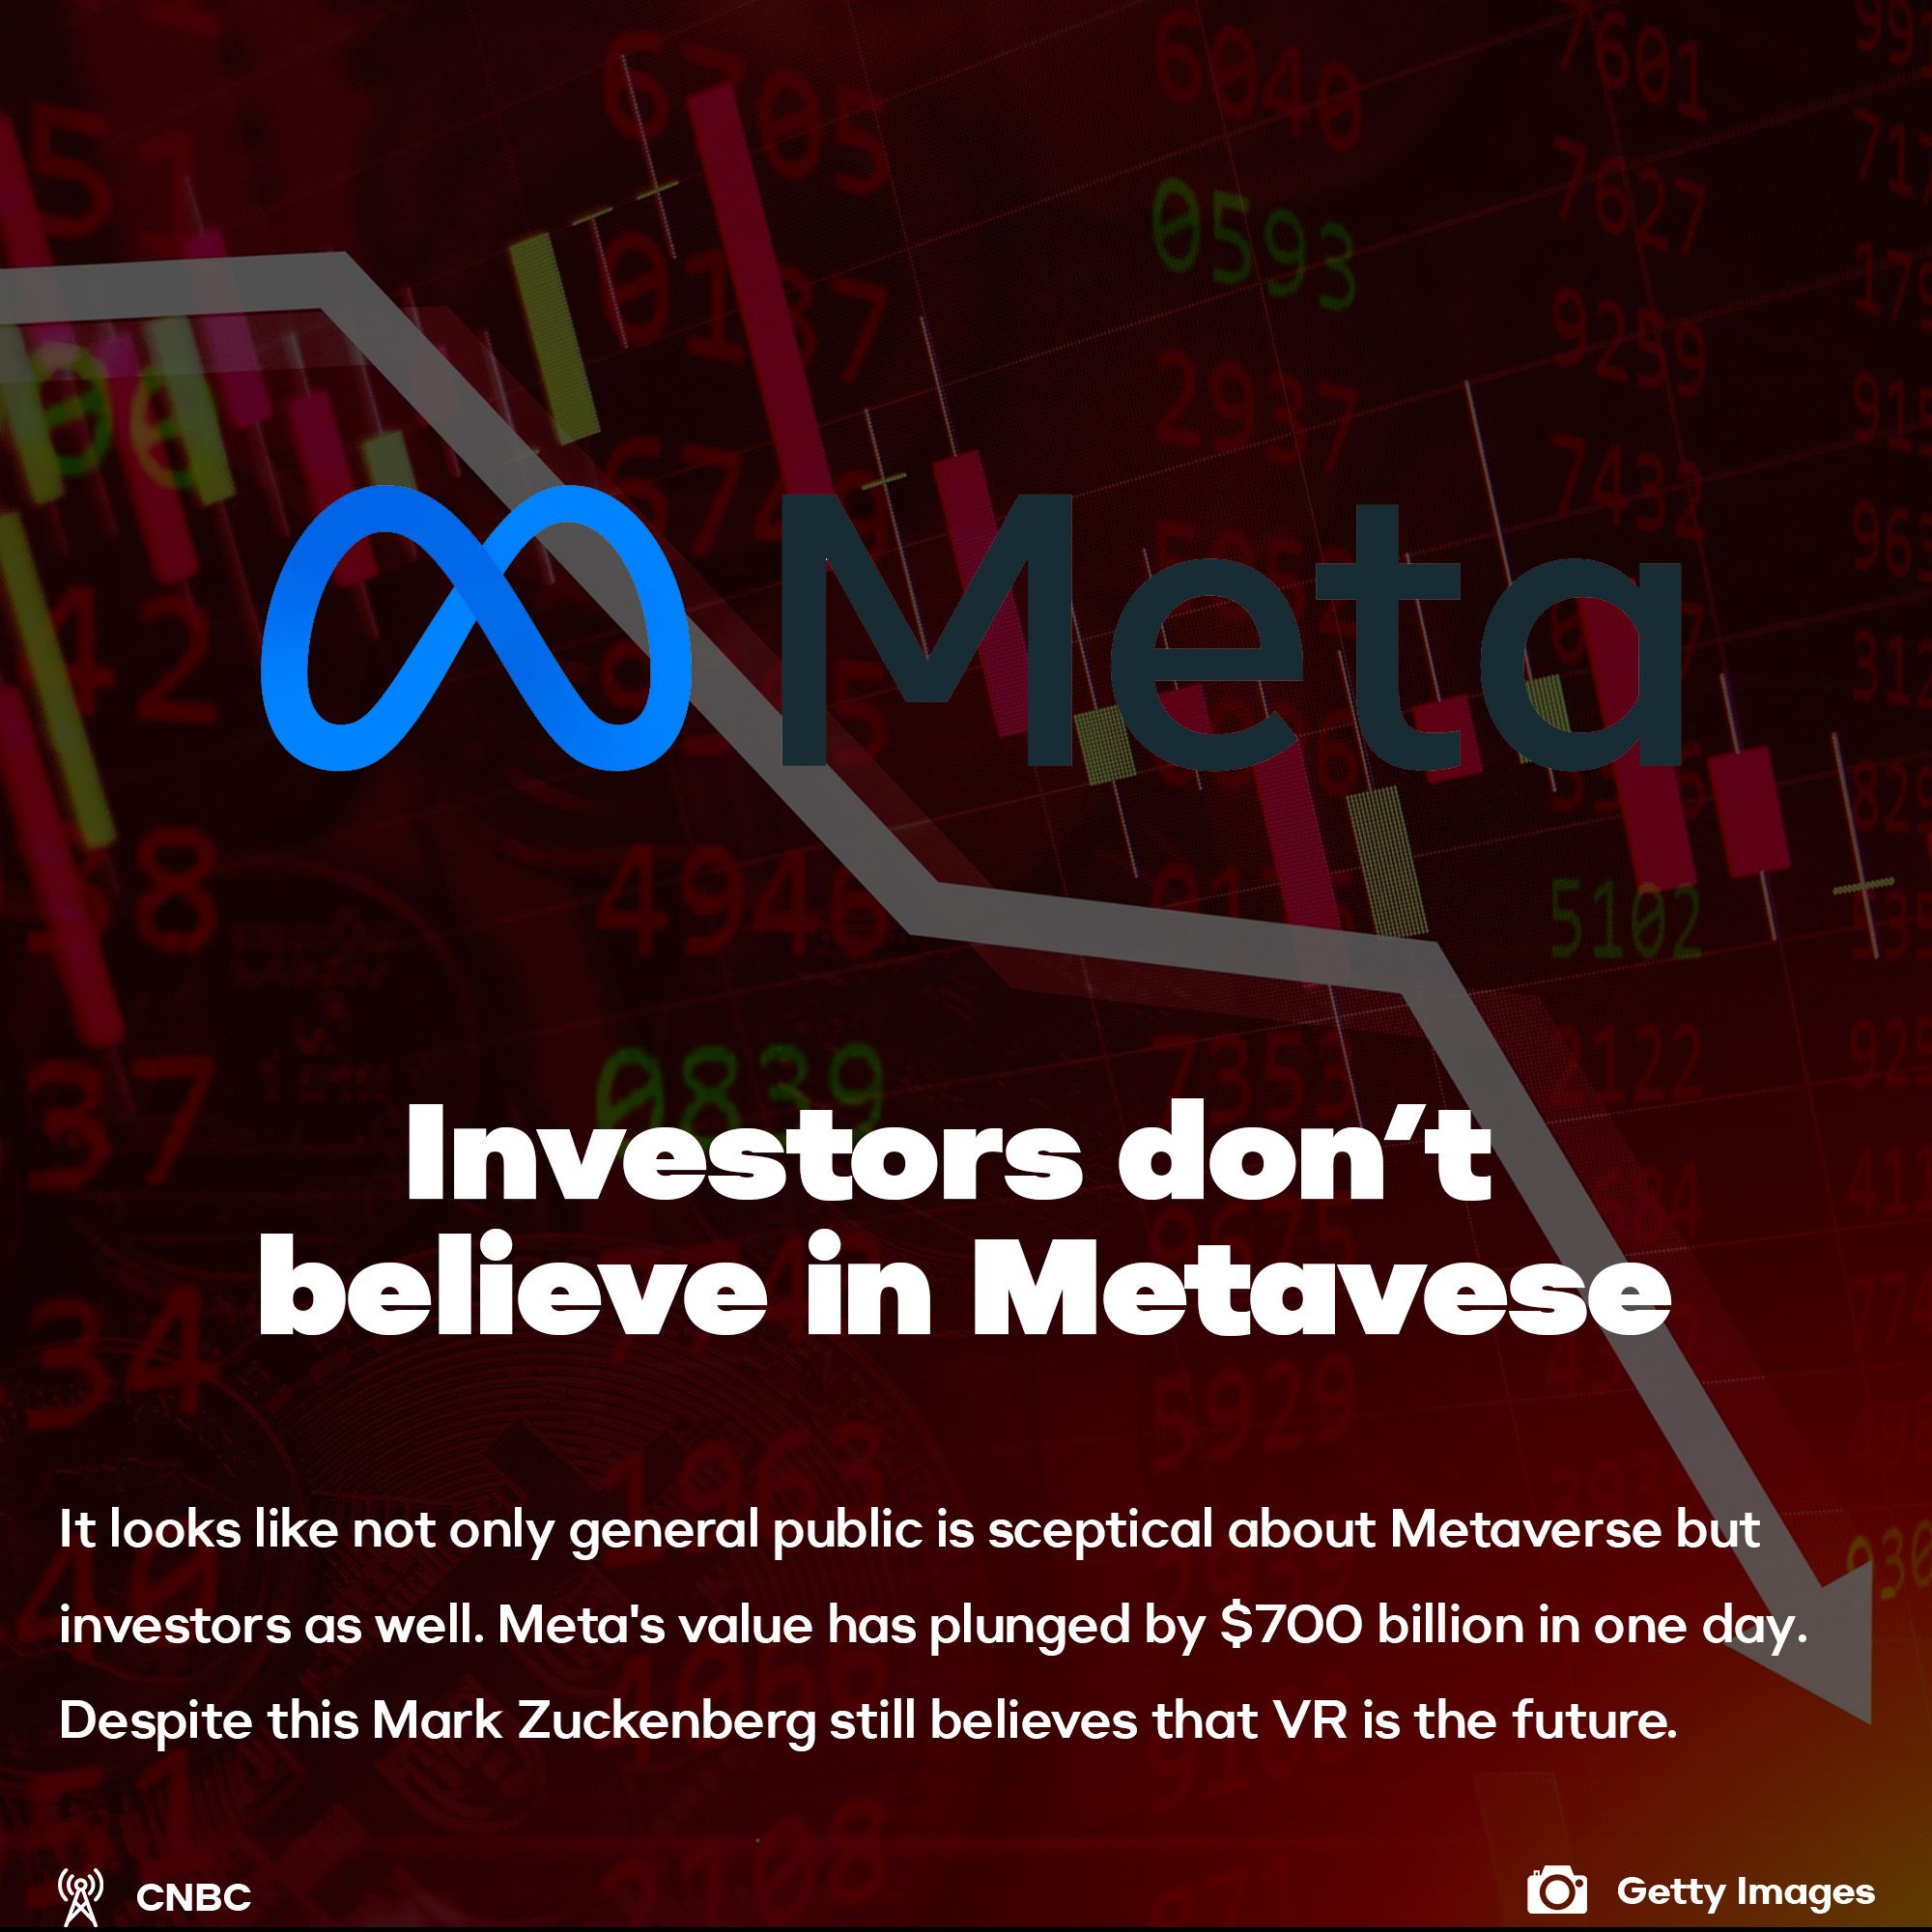 Metaverse not appealing to investors